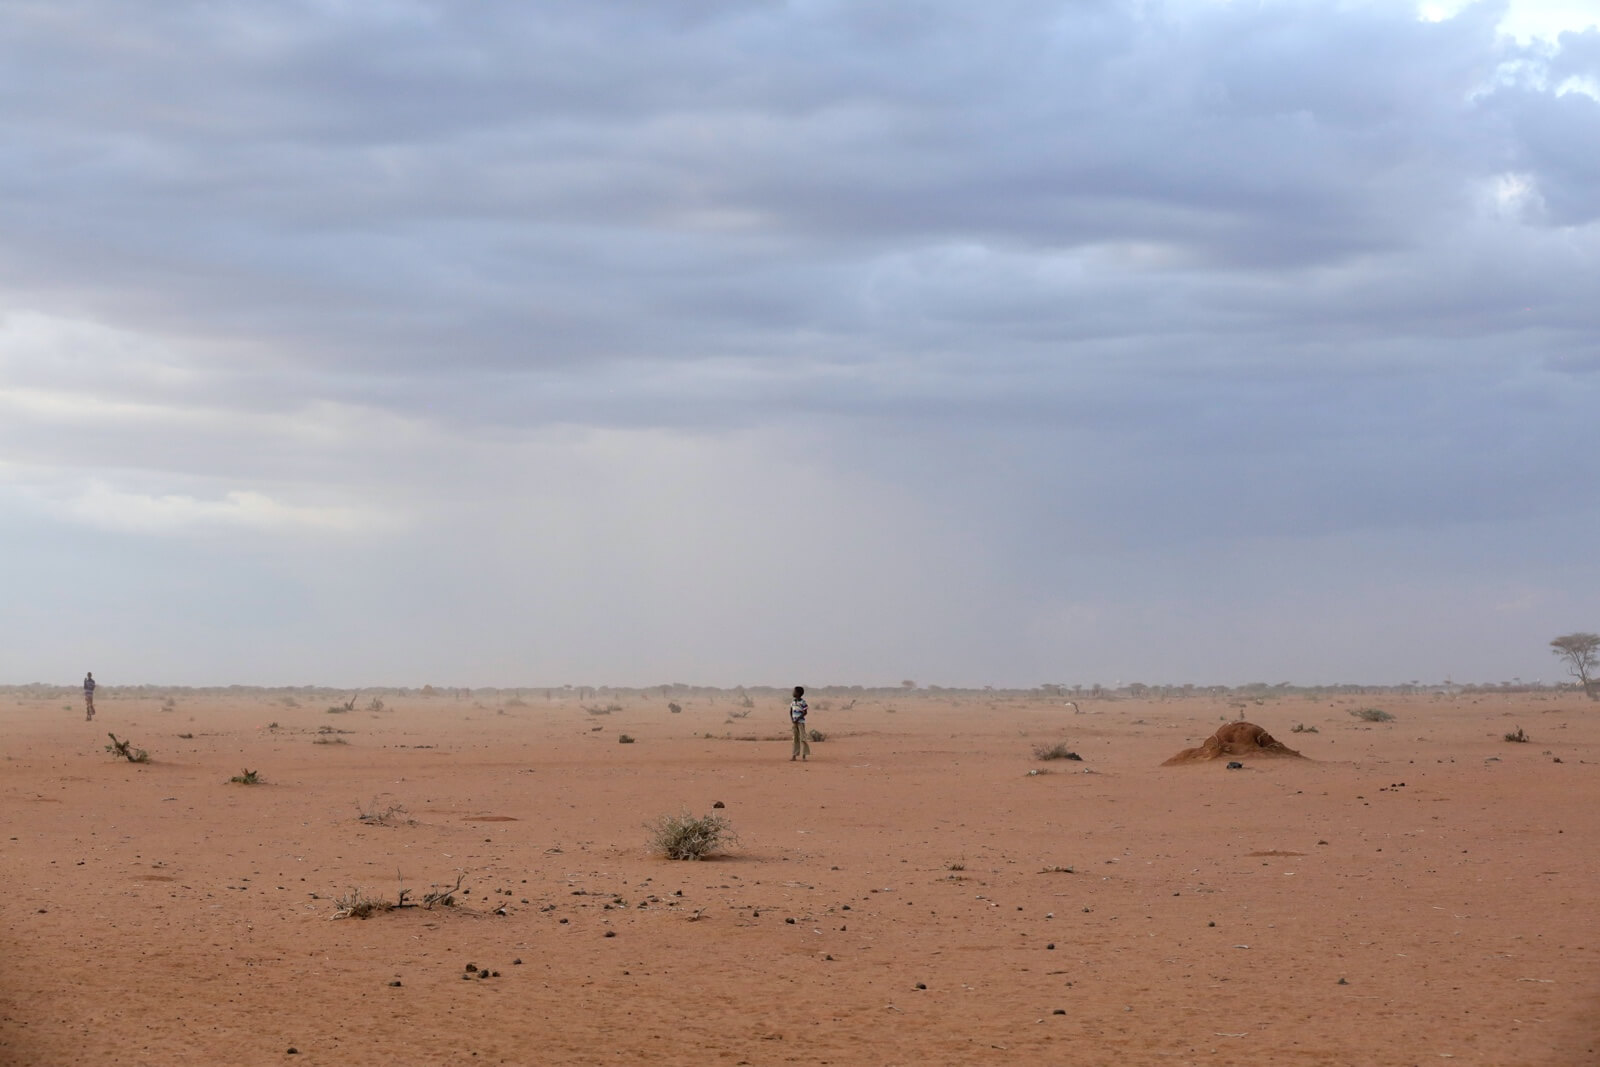 The boy standing in the desert